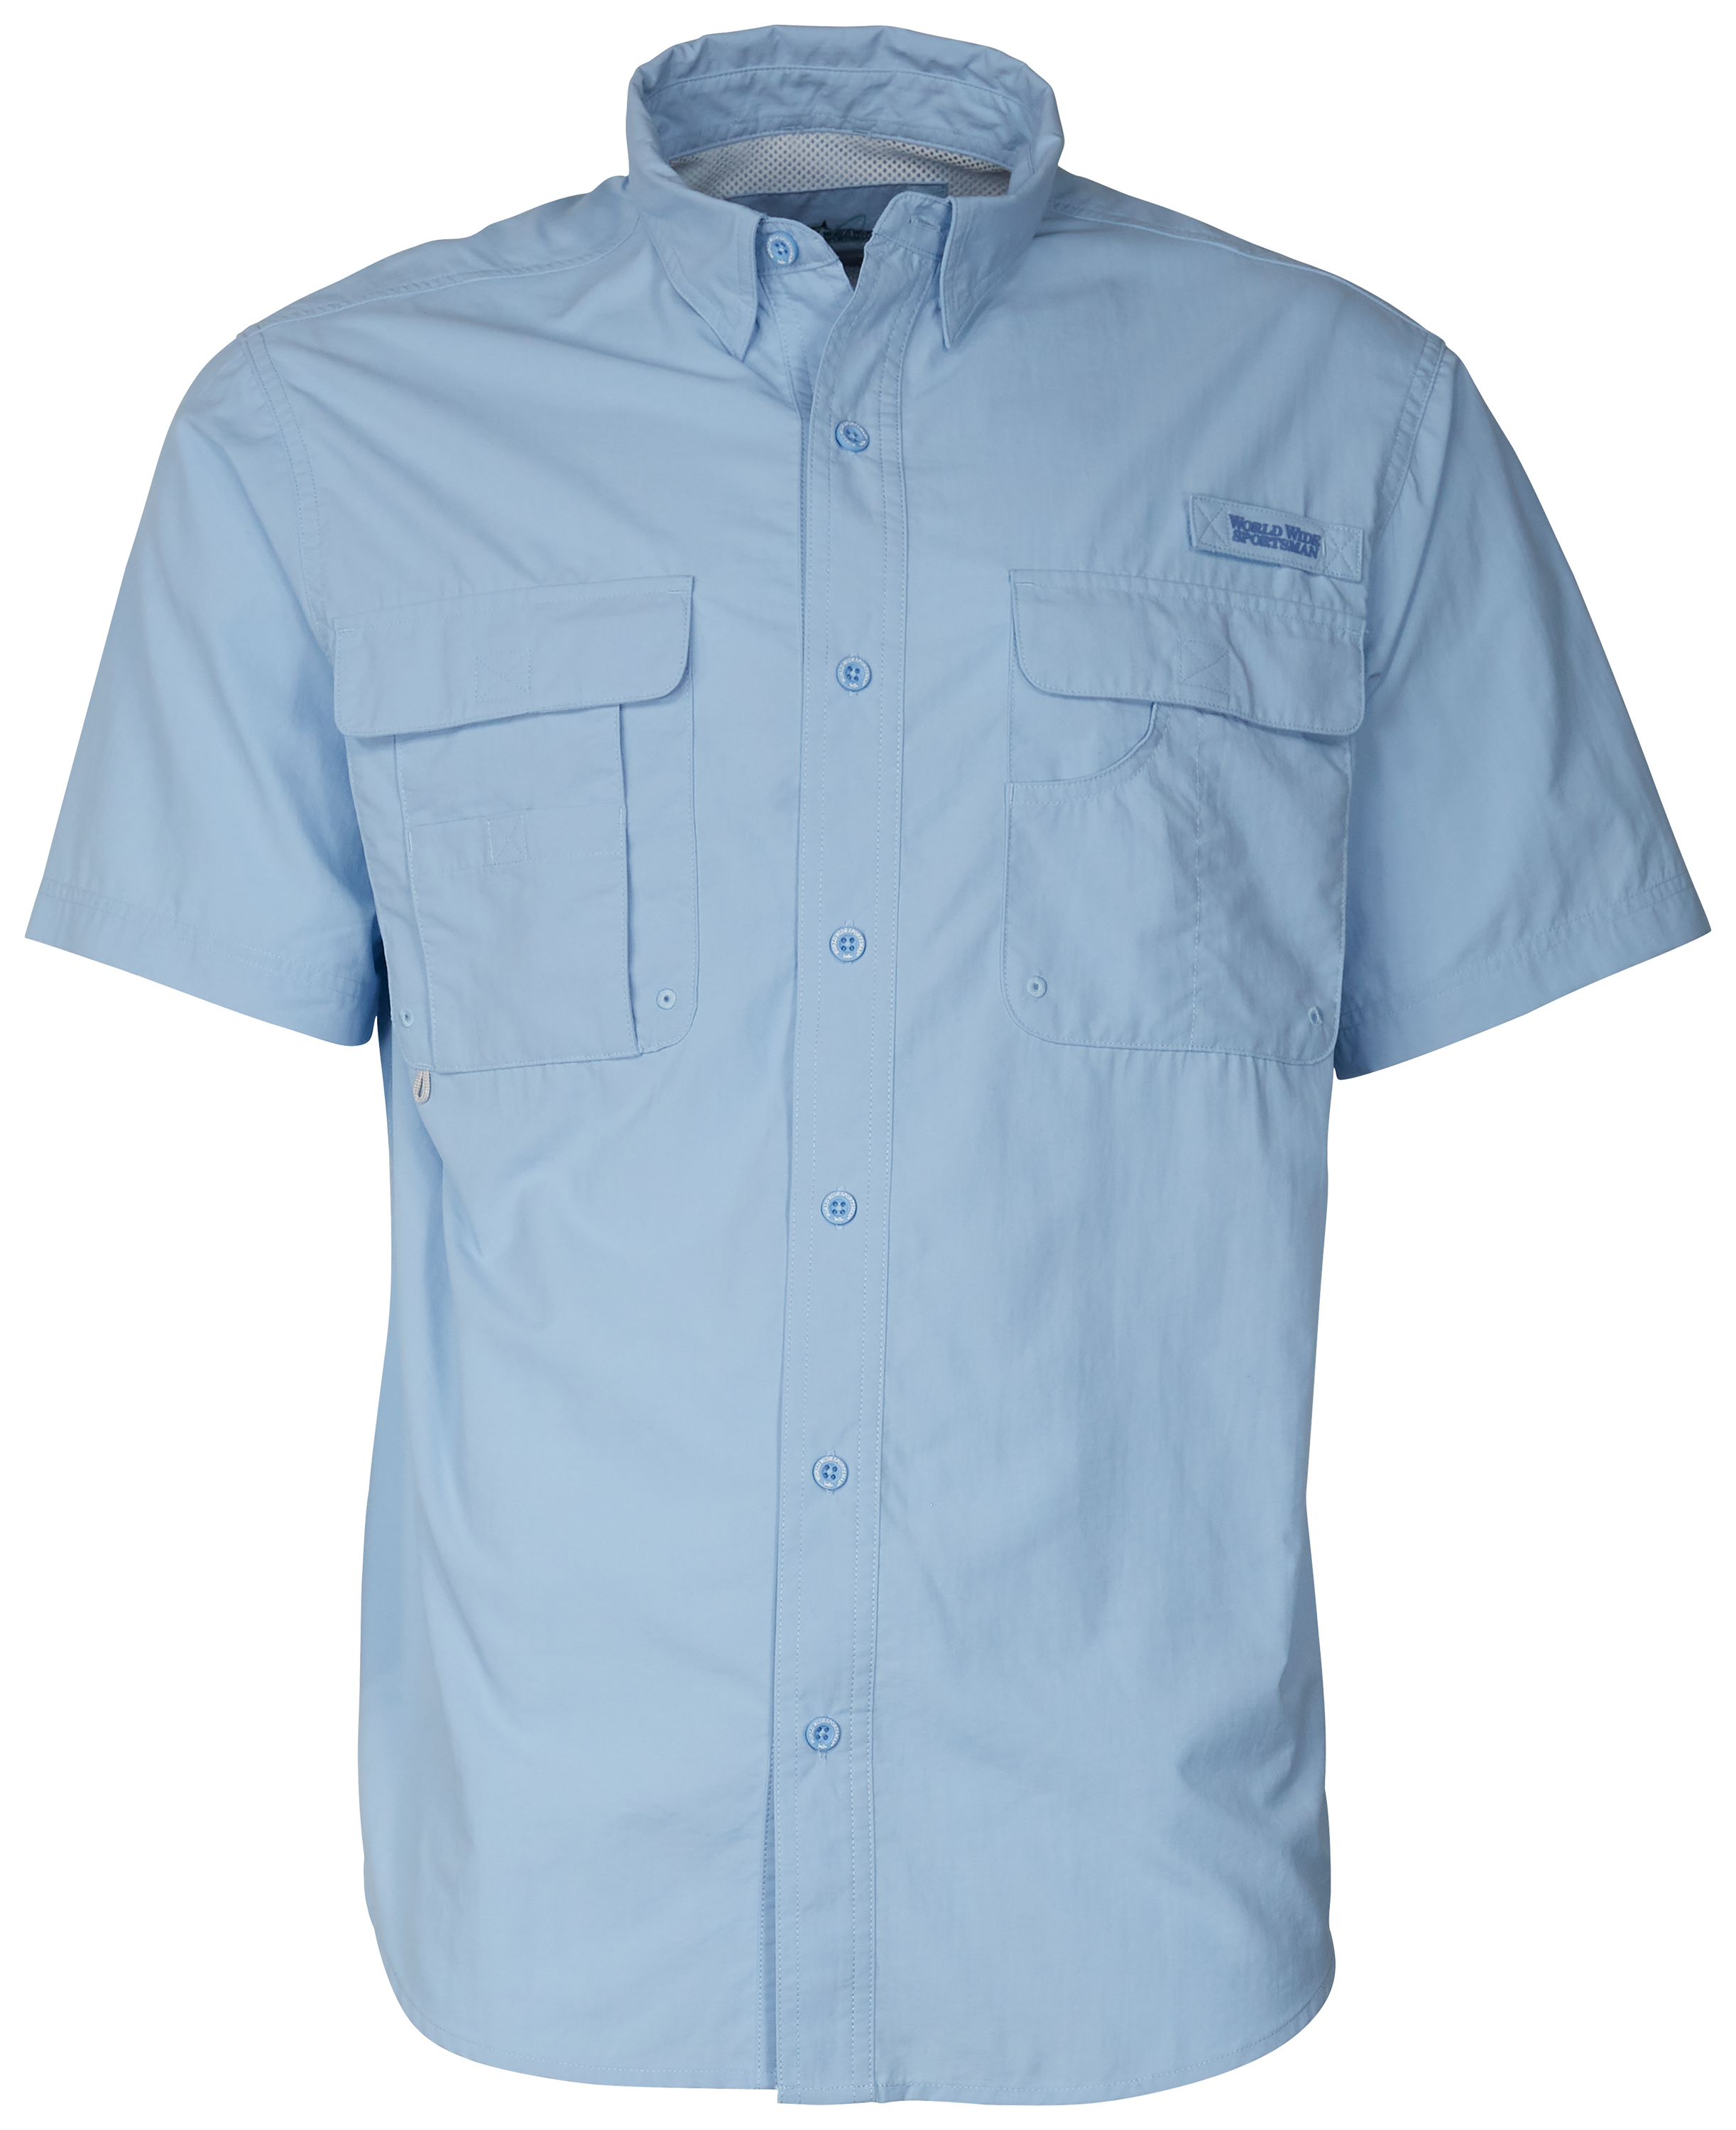 World Wide Sportsman Recycled-Nylon Angler 2.0 Short-Sleeve Button-Down Shirt for Men - Placid Blue - M